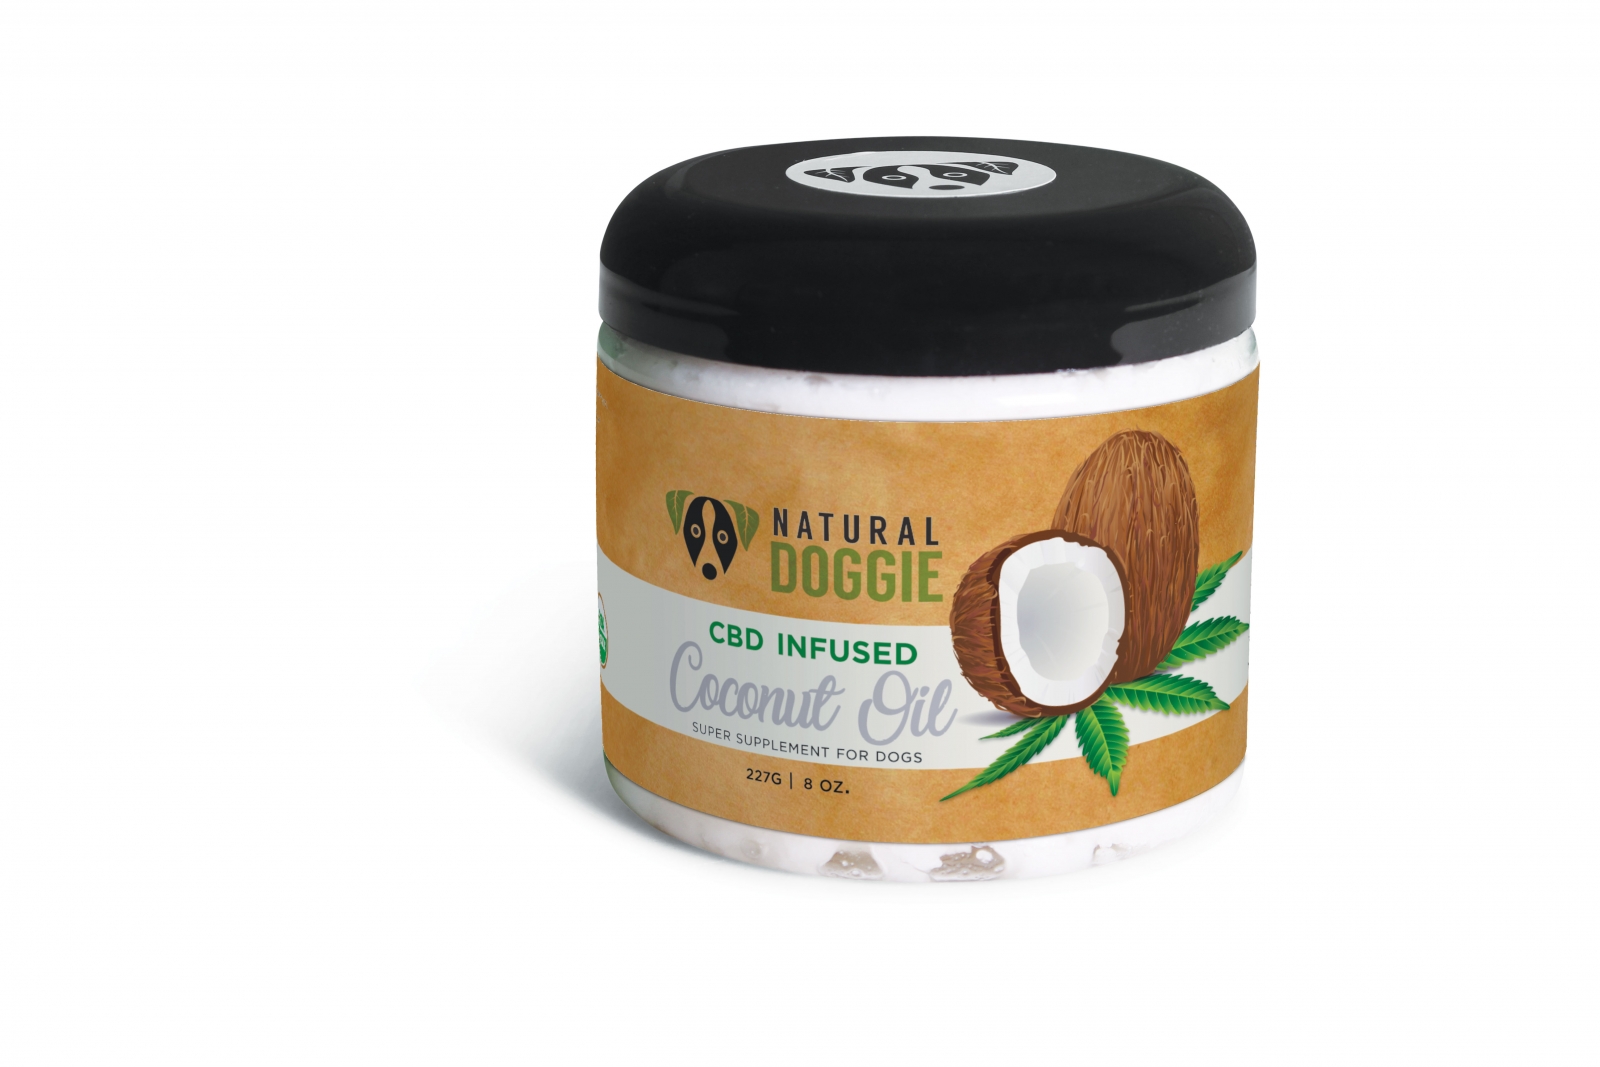 Natural Doggie natural coconut oil, CBD infused dog coconut oil